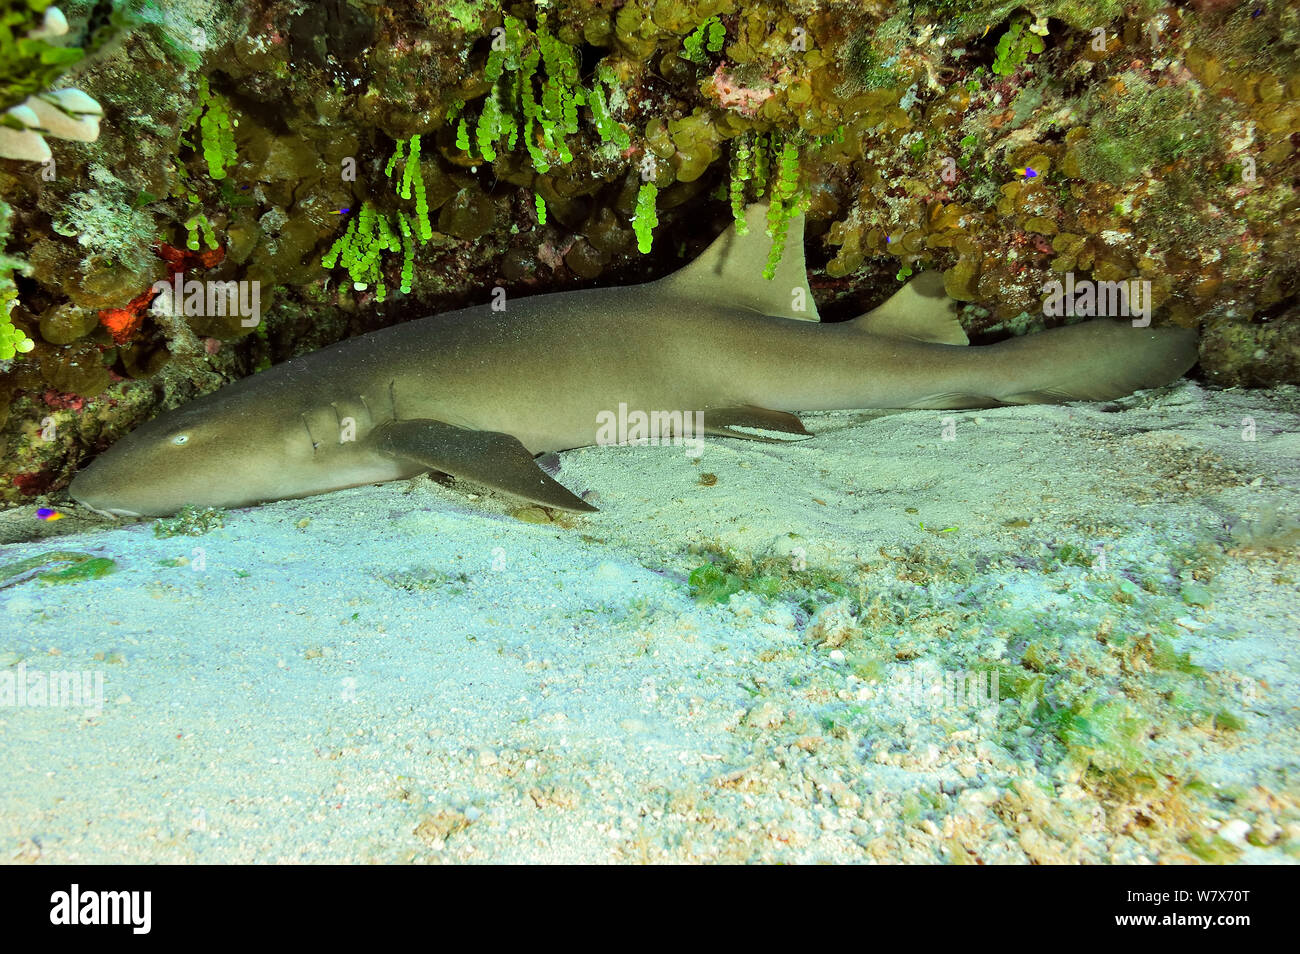 Atlantic nurse shark (Ginglymostoma cirratum), San Salvador Island / Colombus Island, Bahamas. Caribbean. Stock Photo